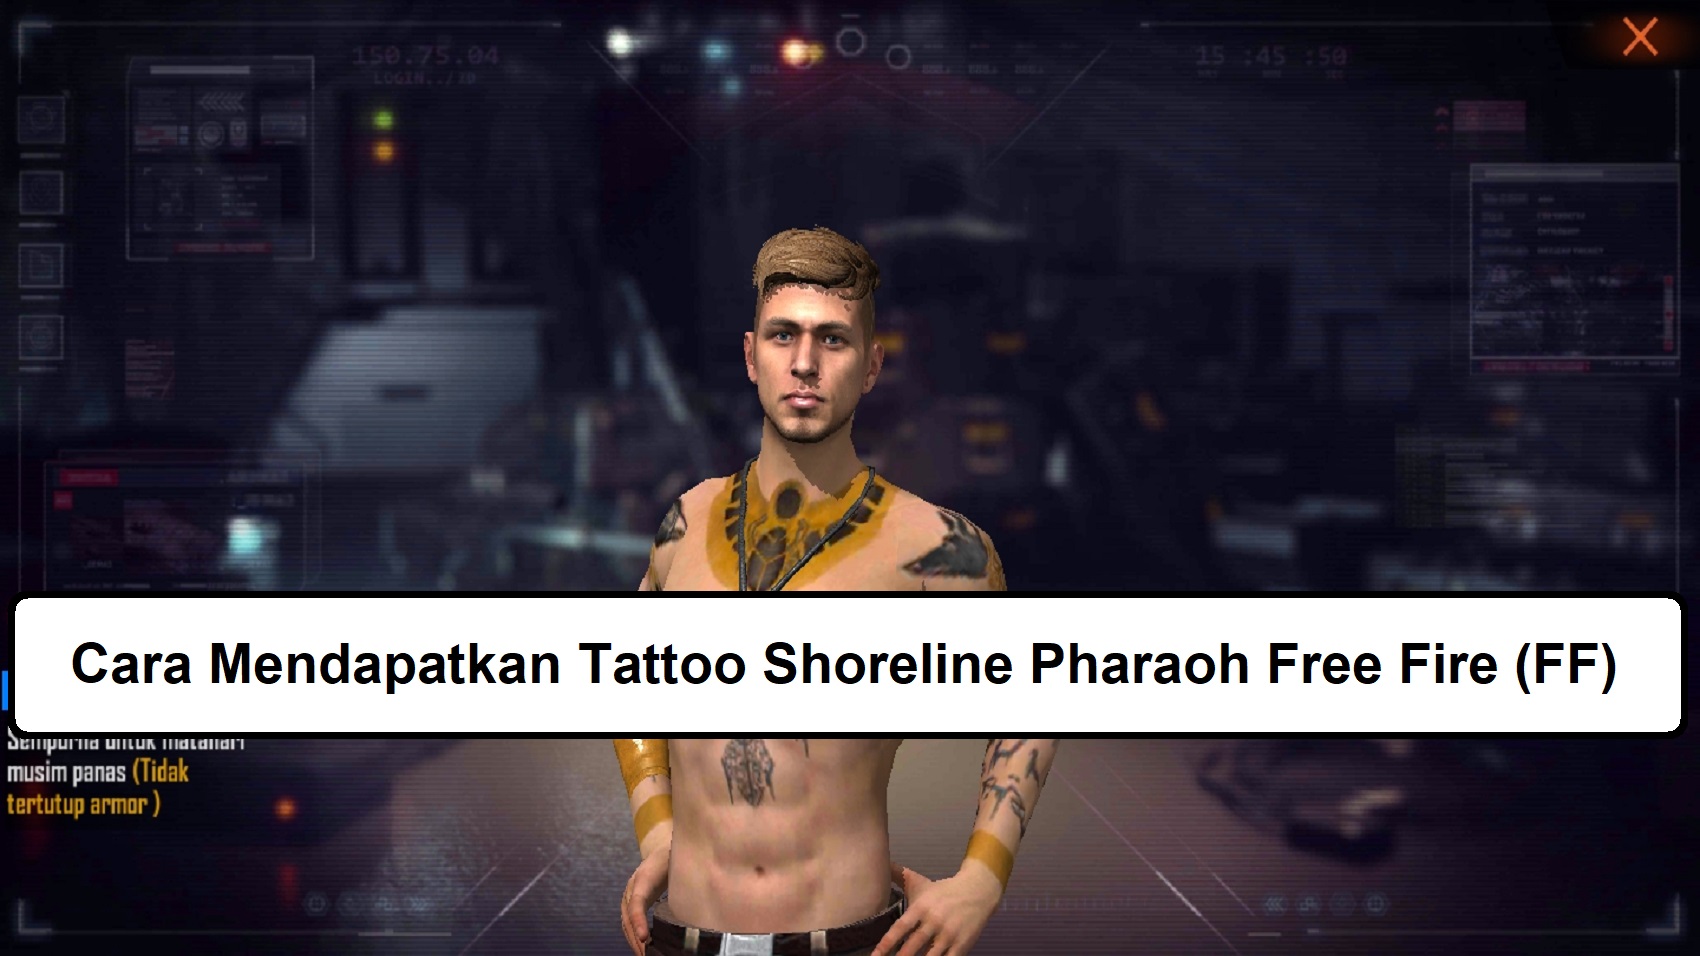 Cara Mendapatkan Tattoo Shoreline Pharaoh Free Fire (FF)